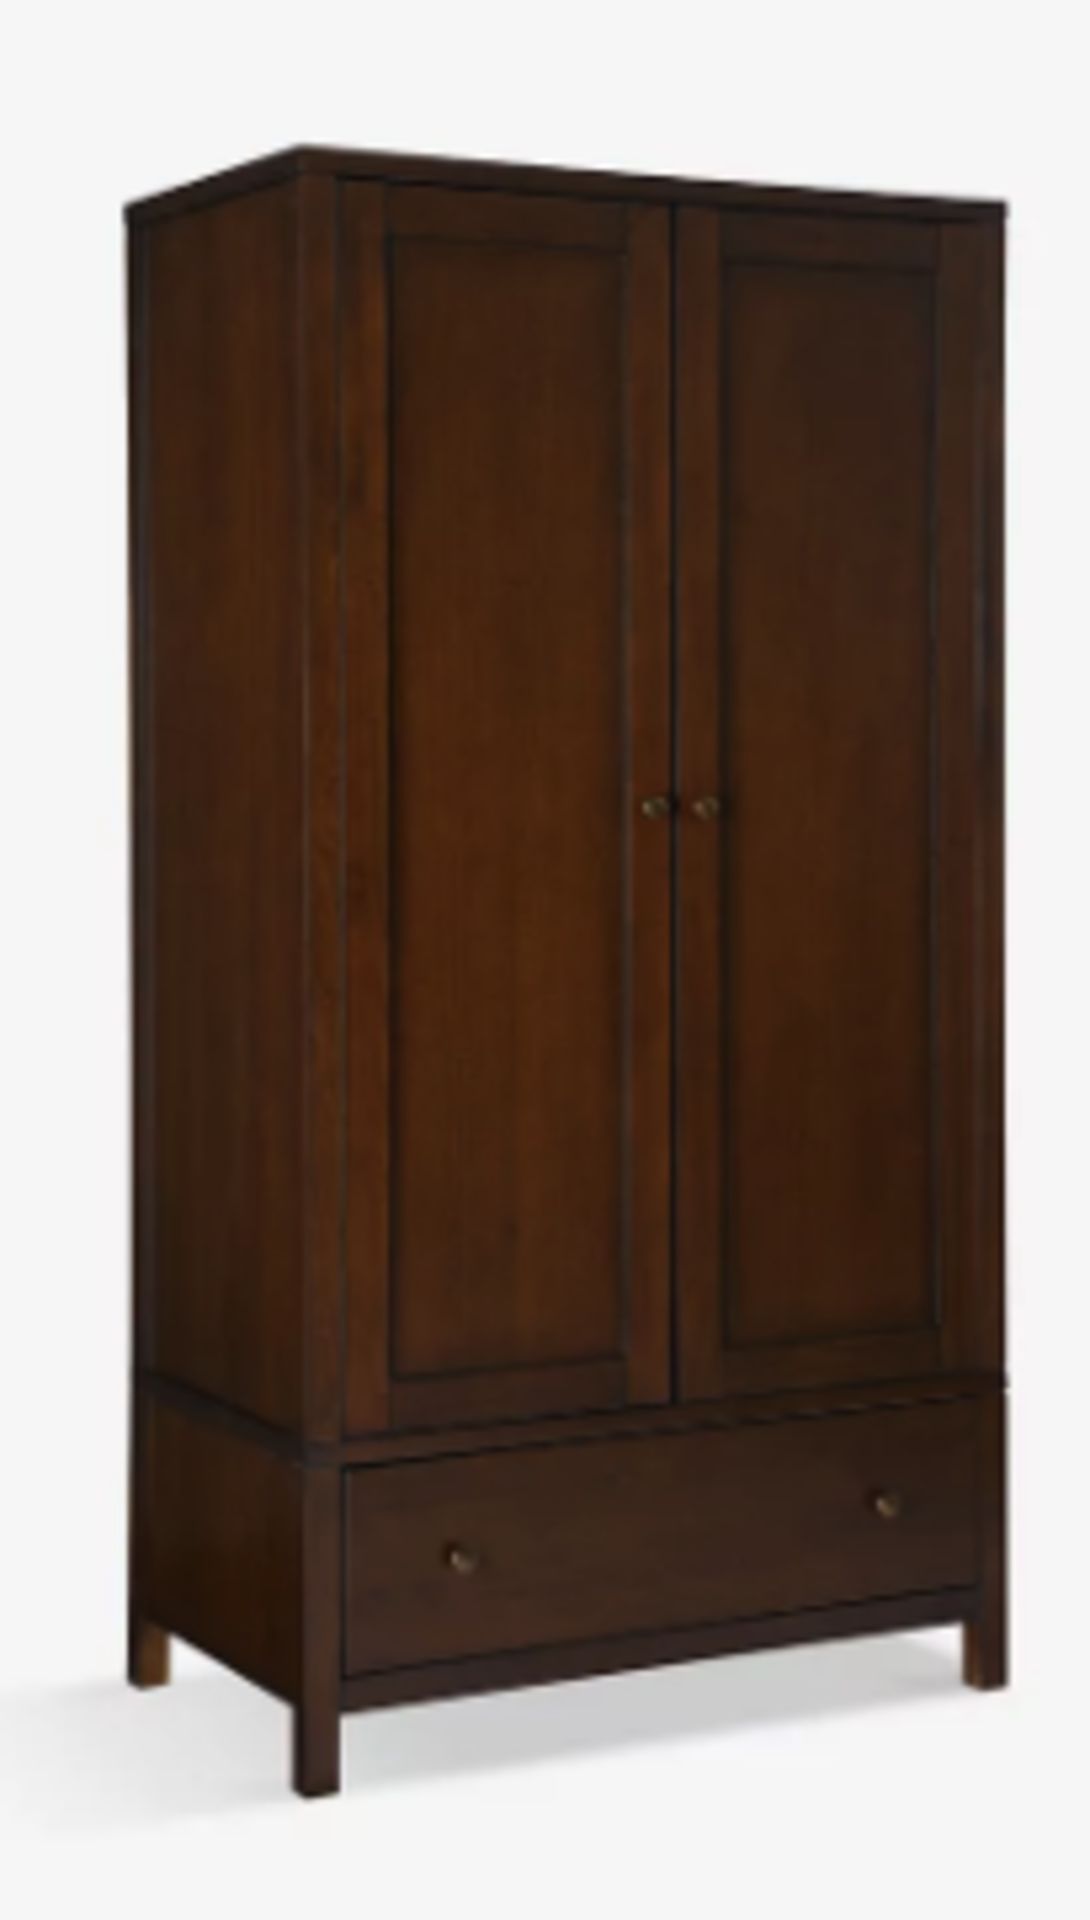 Item Description - John Lewis & Partners Medan 2 Door, 1 Drawer Wardrobe, Dark Wood - Stock N...